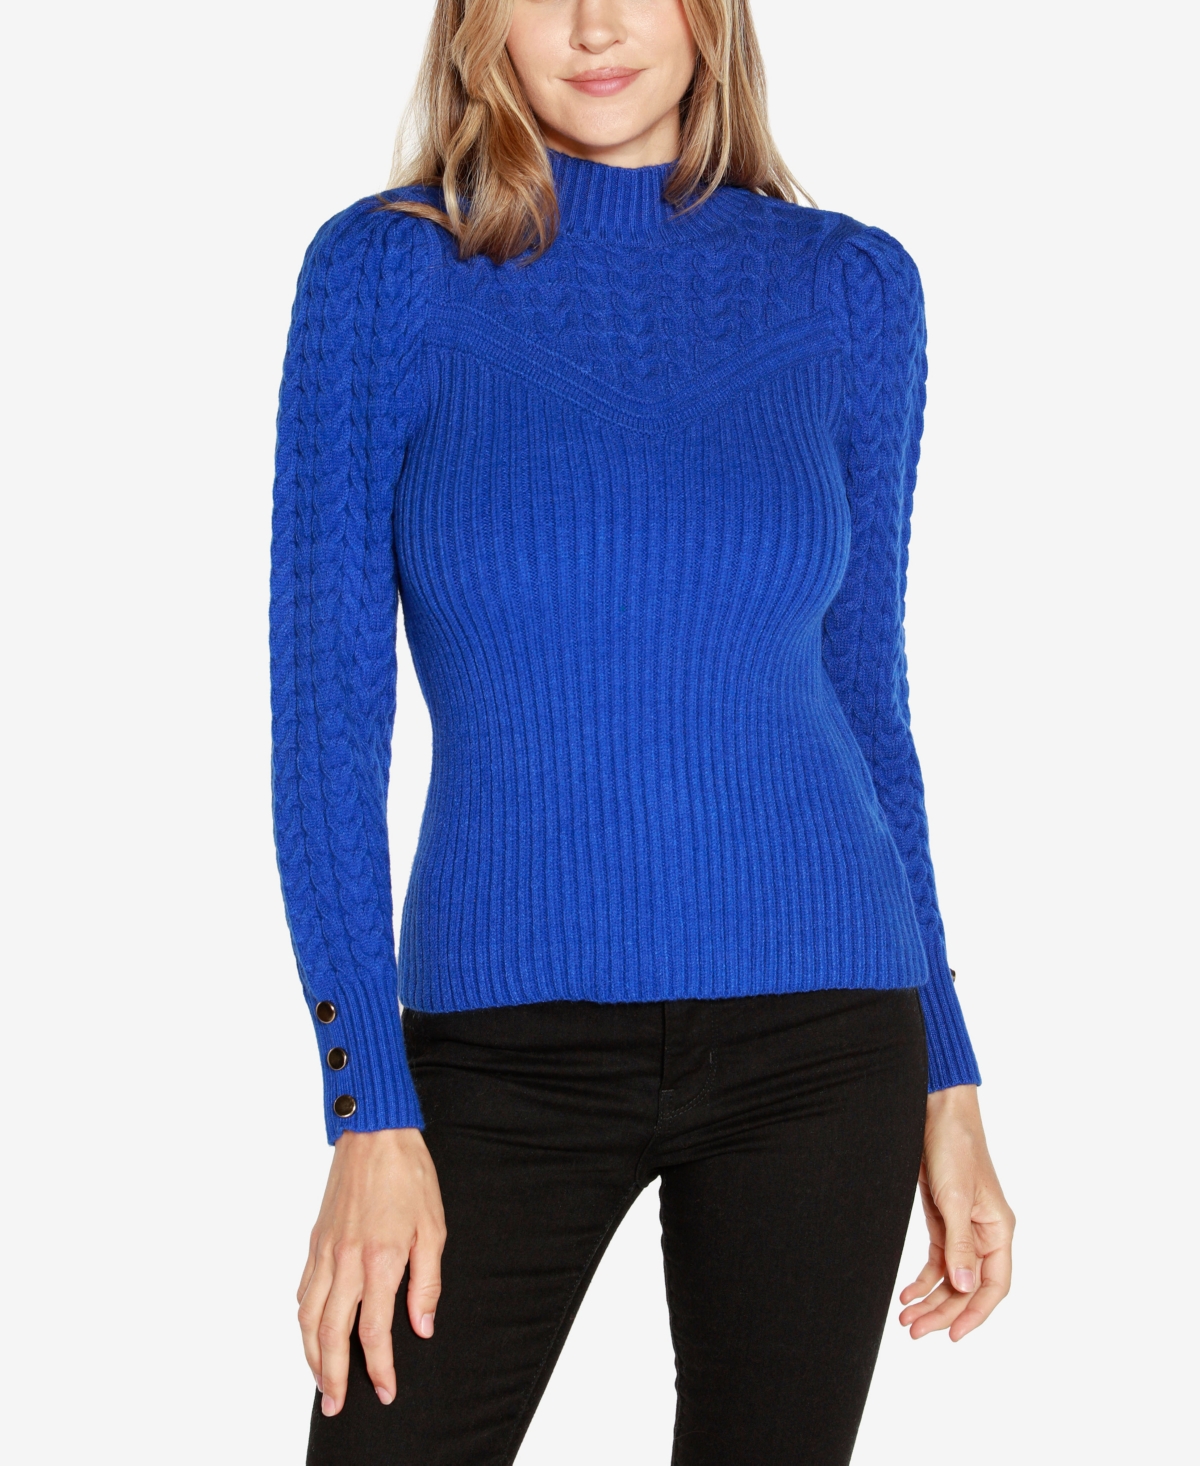 Black Label Women's Ribbed Sweater - Cobalt